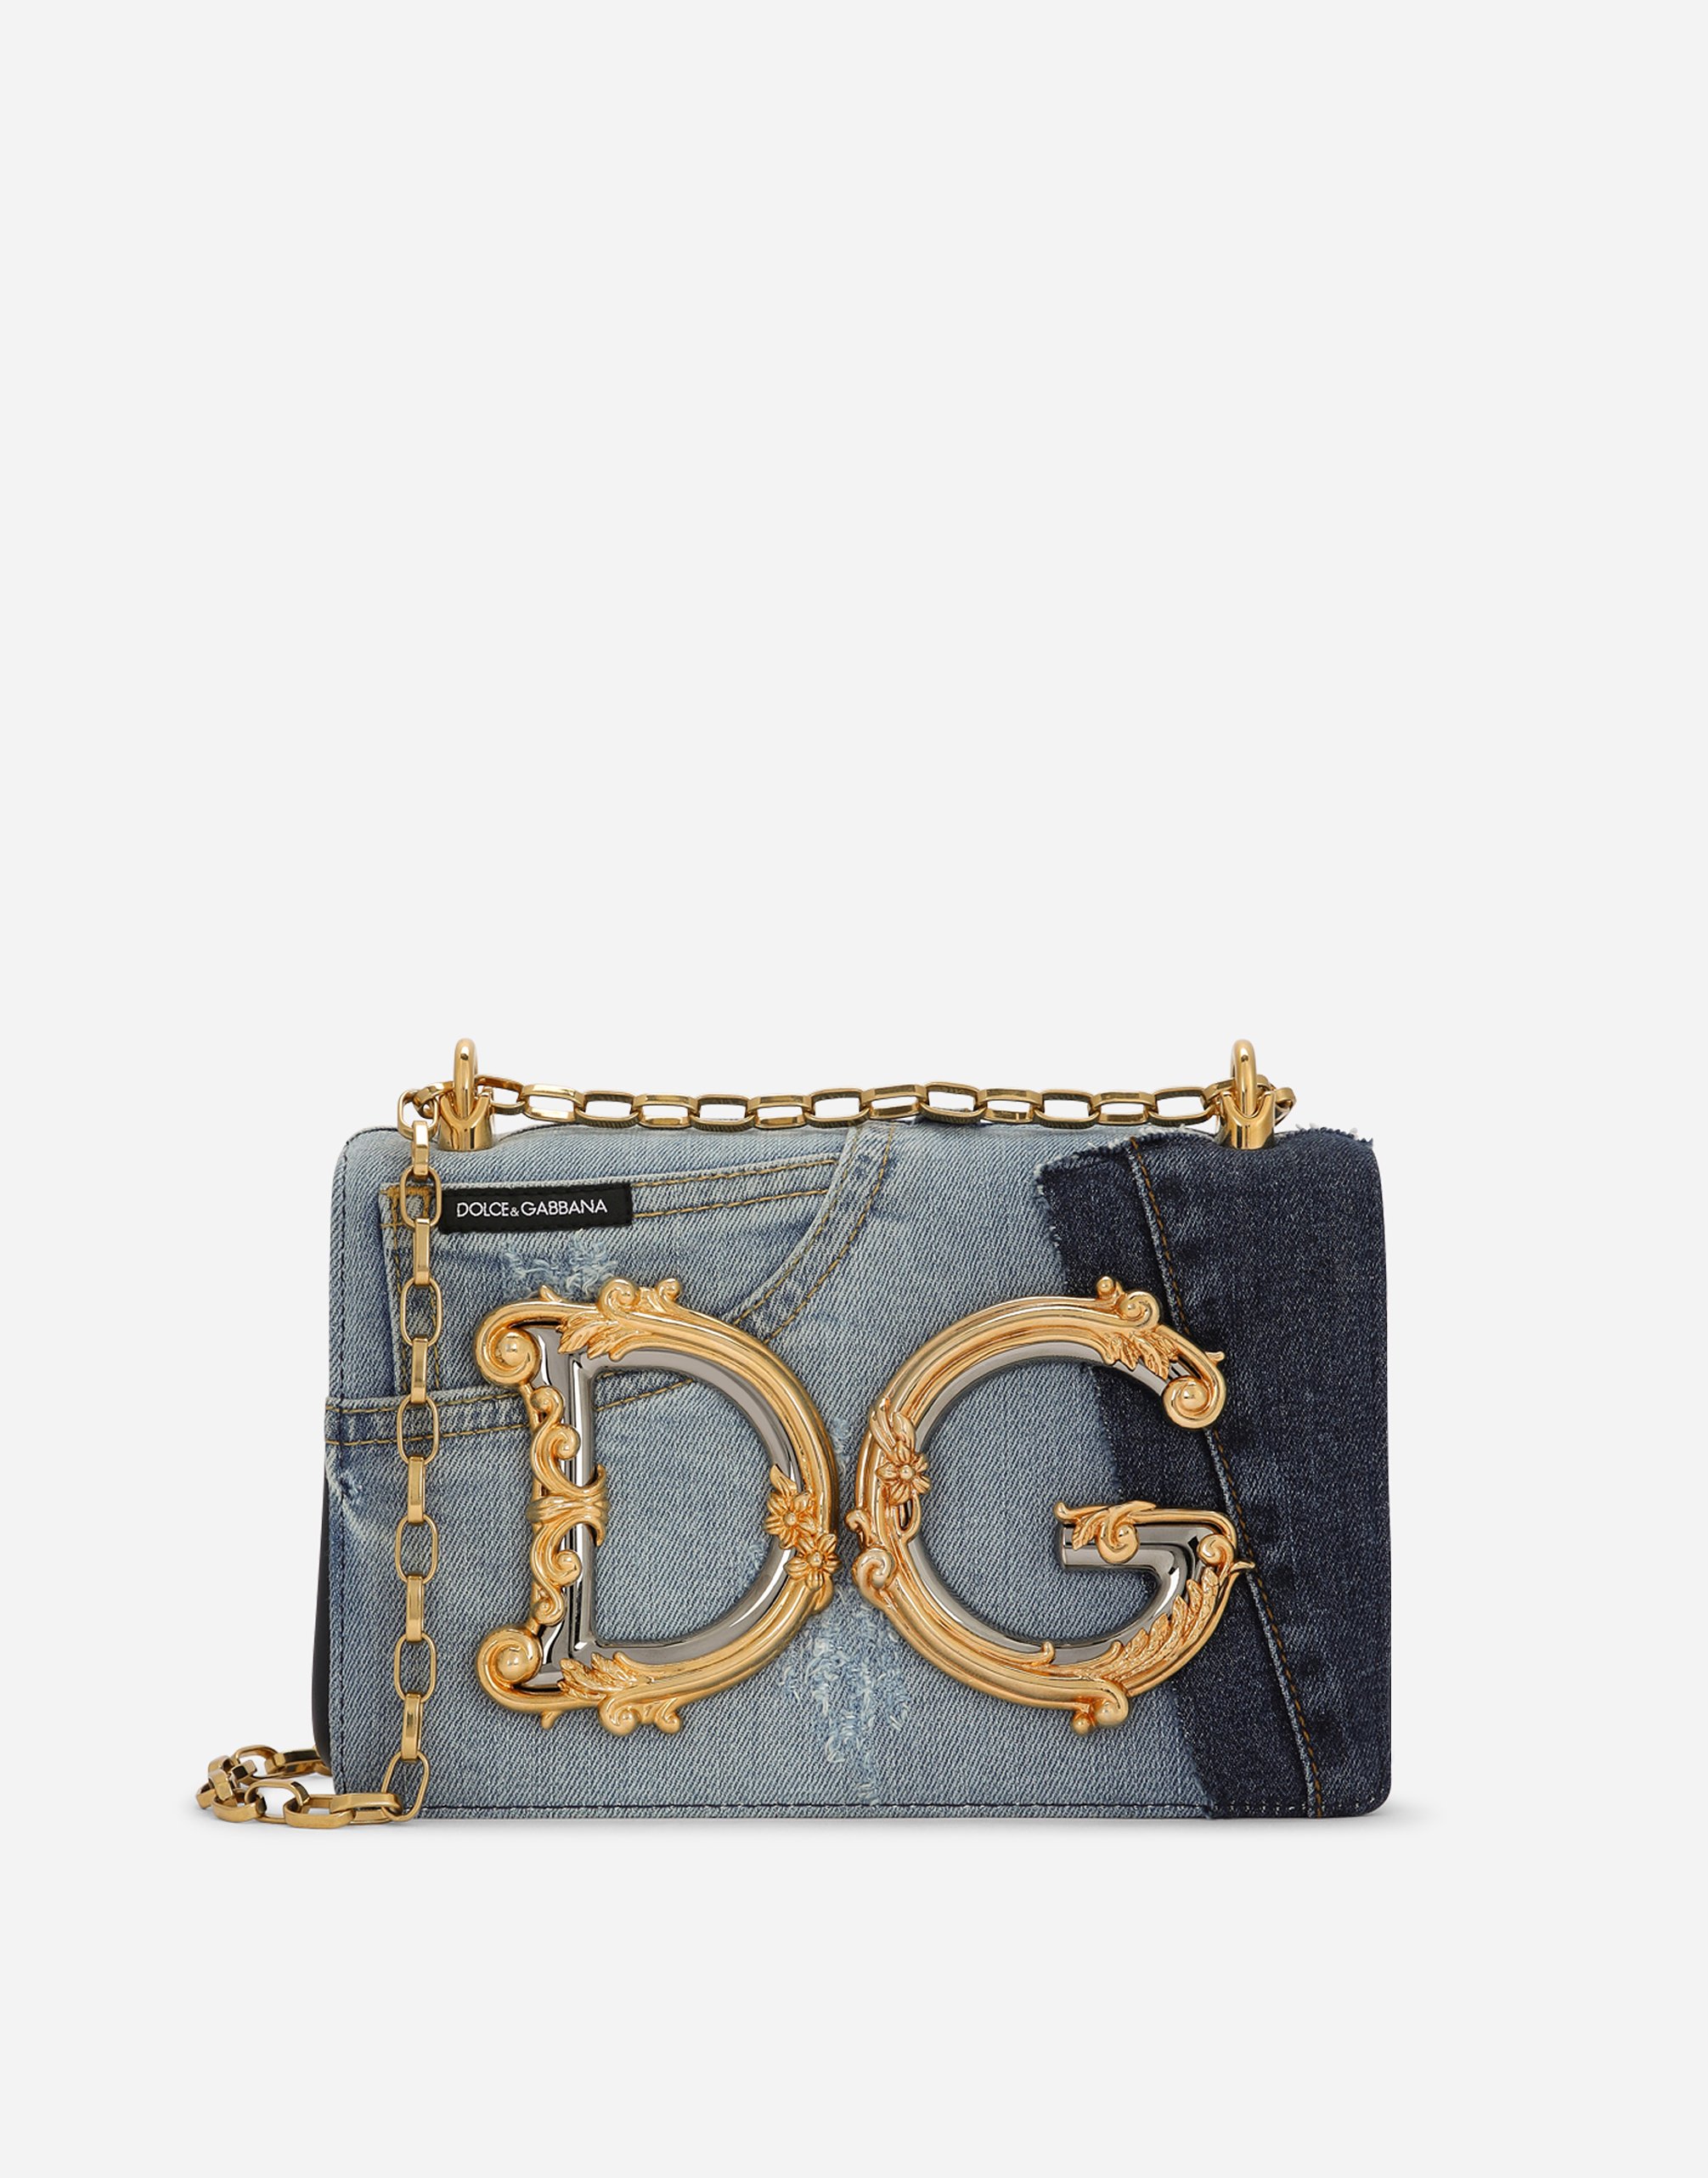 transactie boekje wolf DG Girls bag in patchwork denim and plain calfskin in Denim for Women |  Dolce&Gabbana®